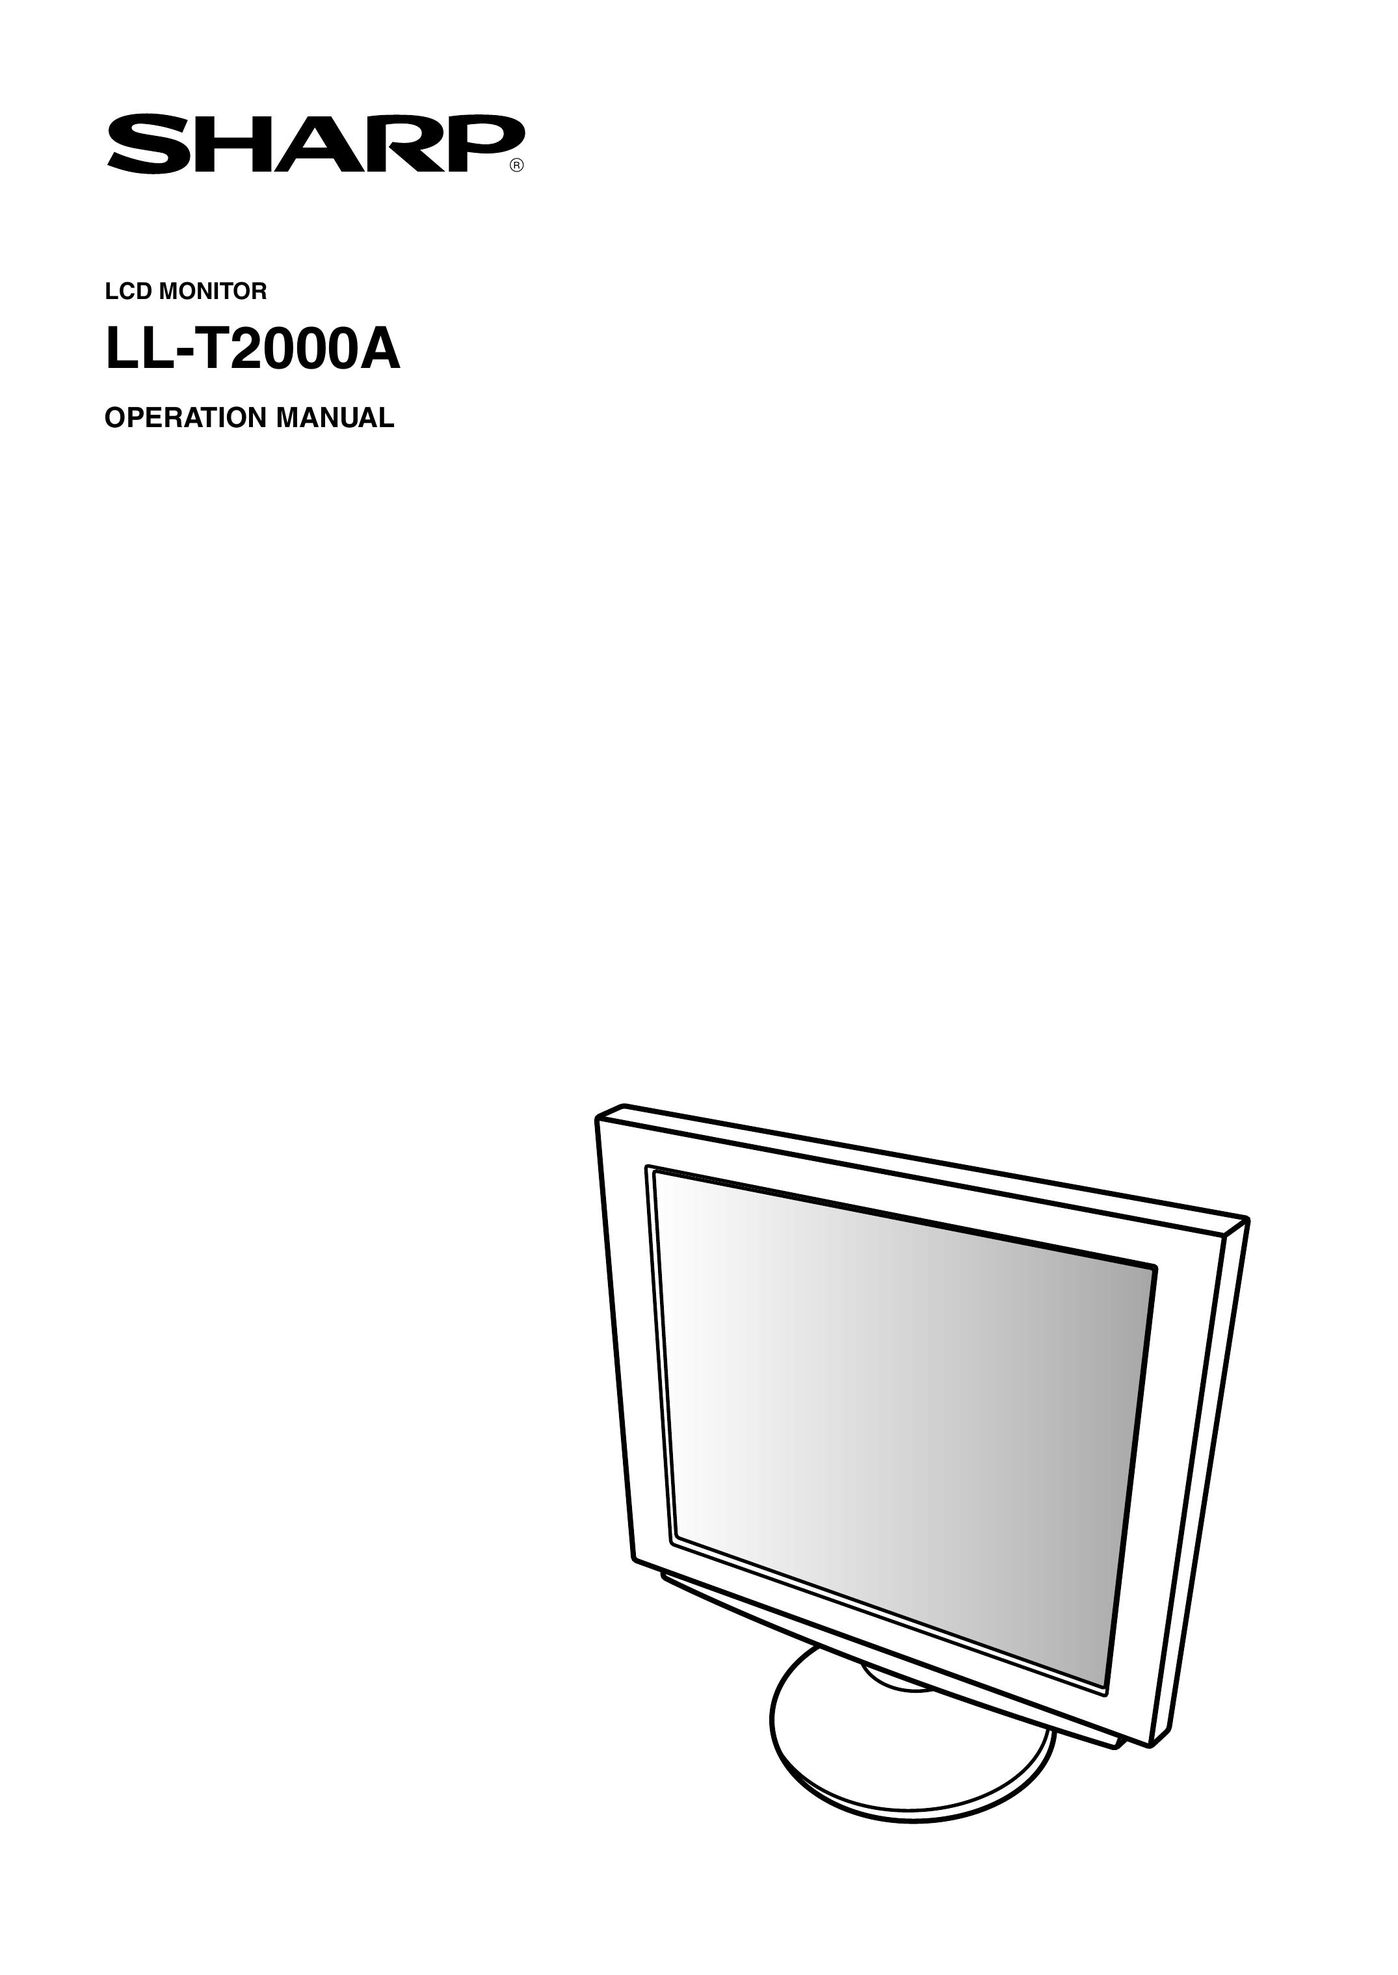 Sharp LL-T2000A Computer Monitor User Manual